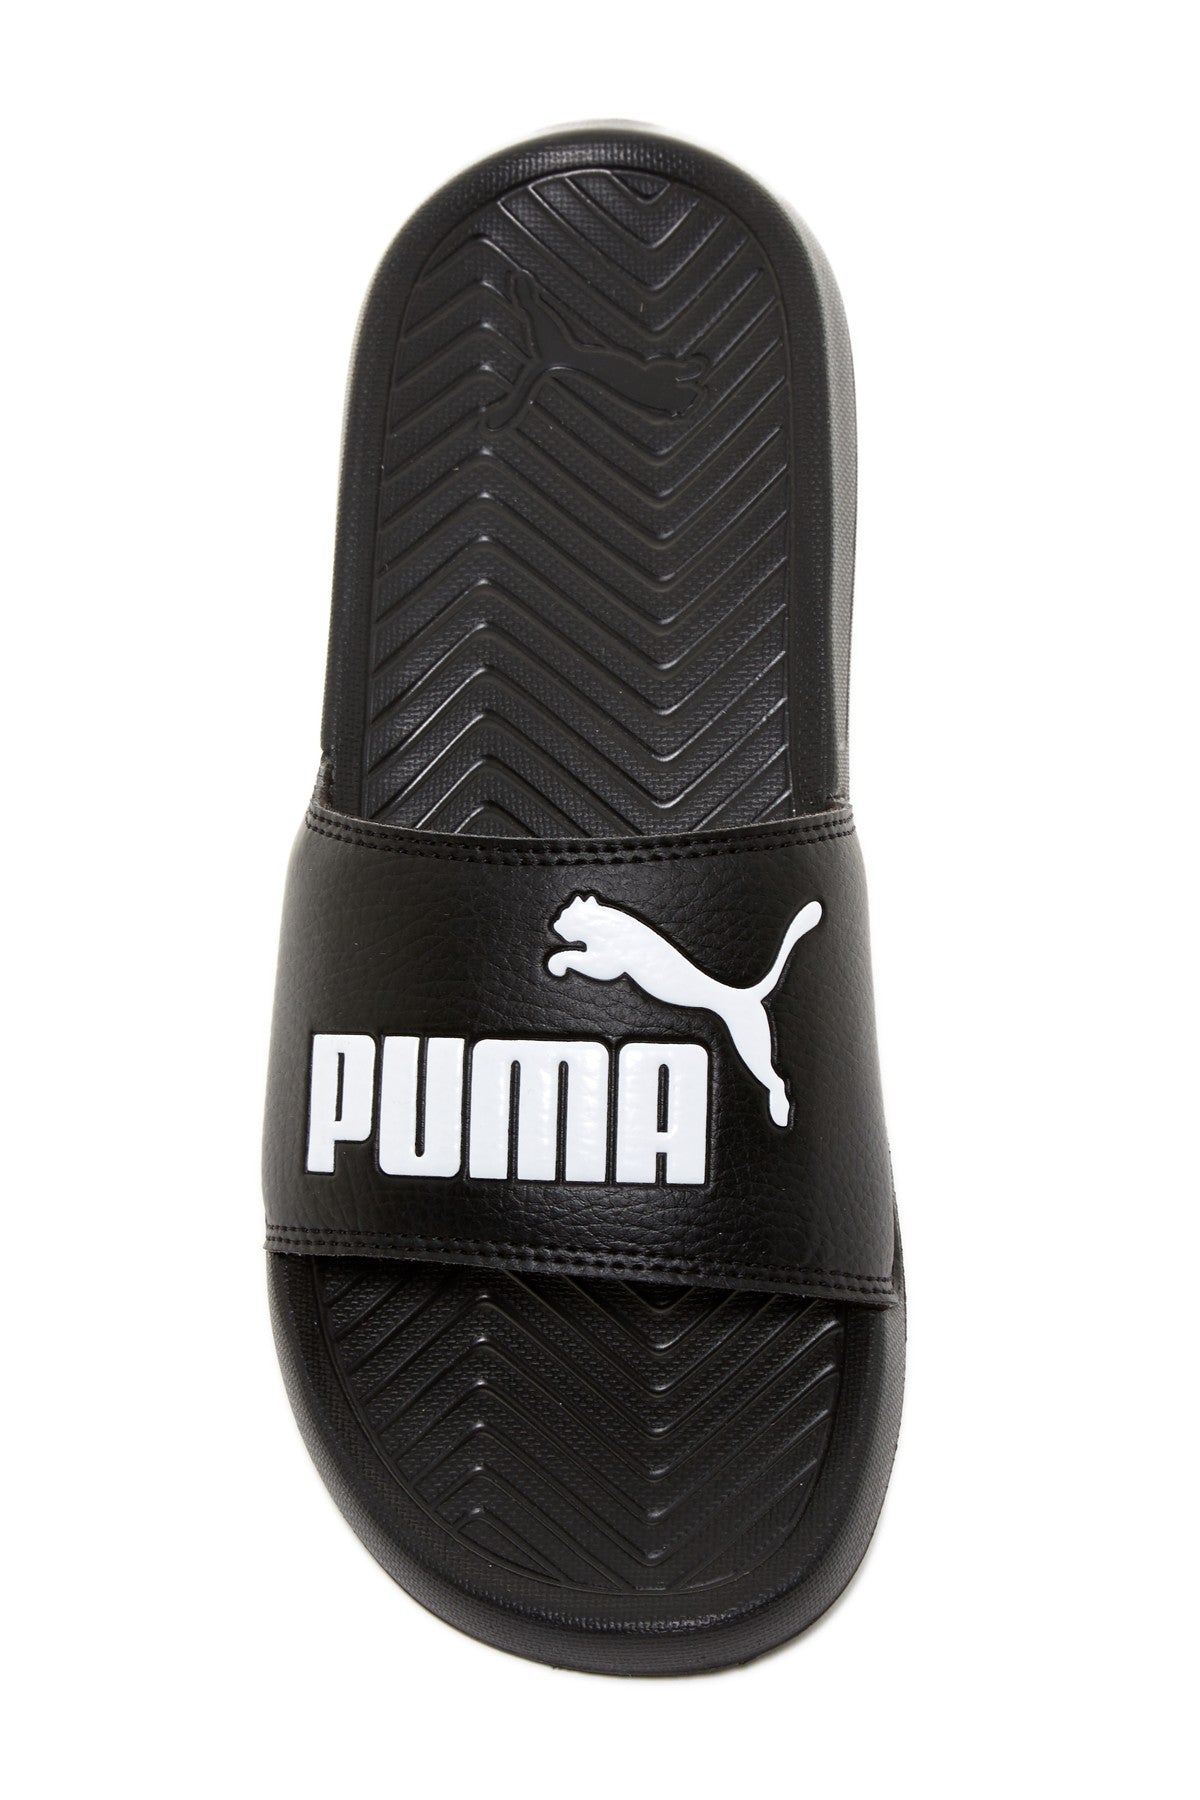 puma slides in black